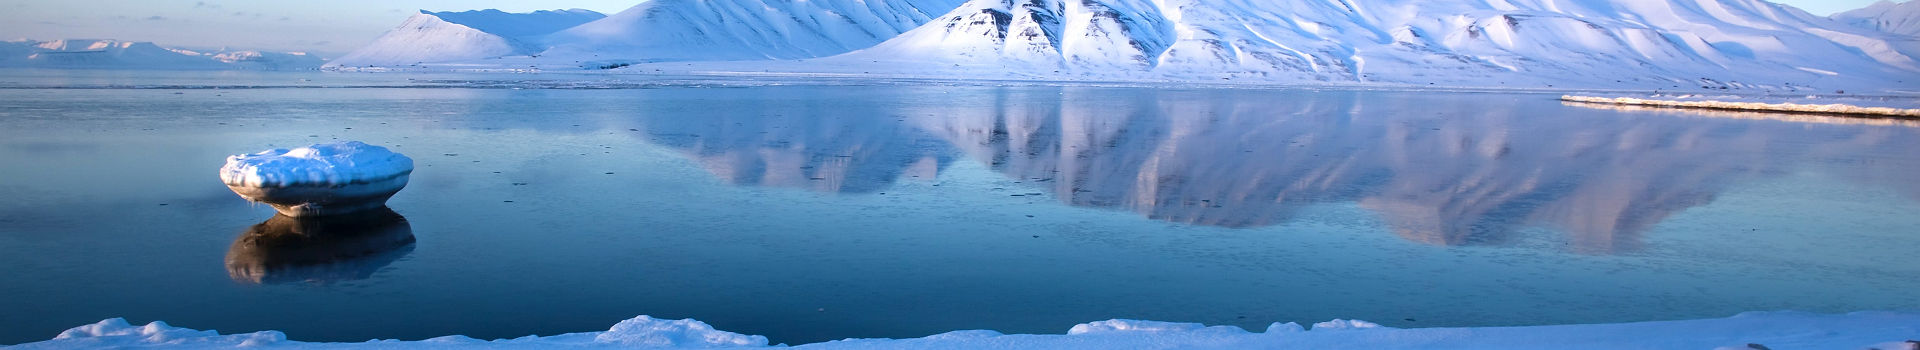 Spitzbergen mountain reflet dans Isfjord paysage d'hiver